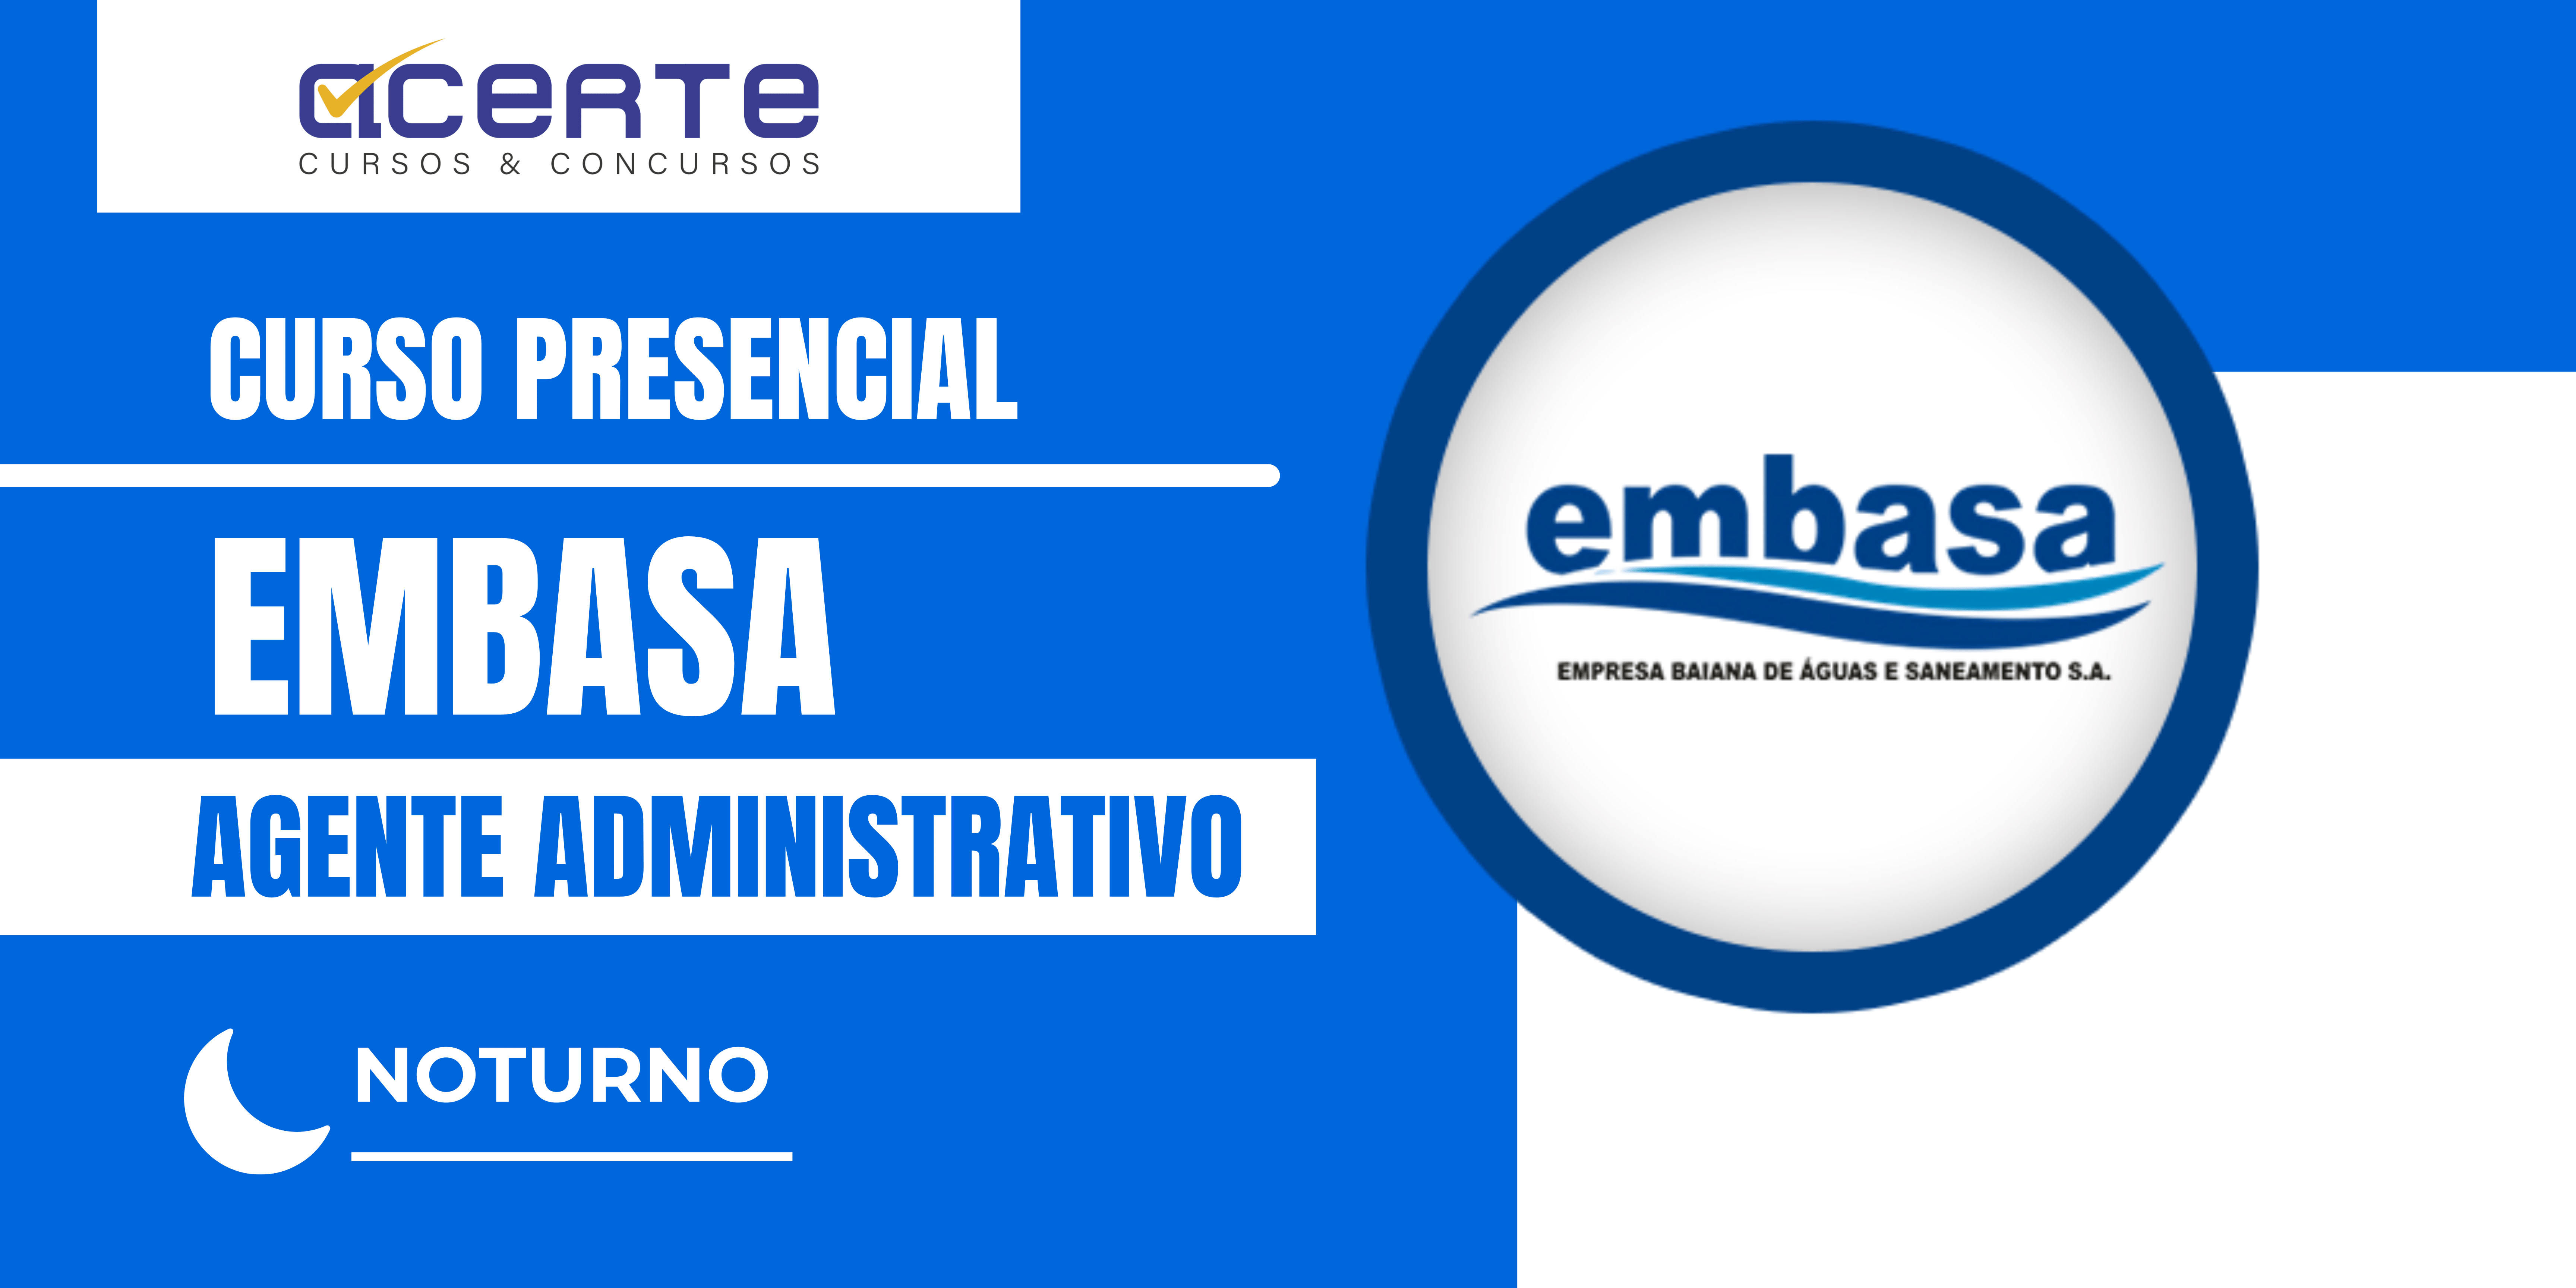 EMBASA - Agente Administrativo - Presencial - Noturno